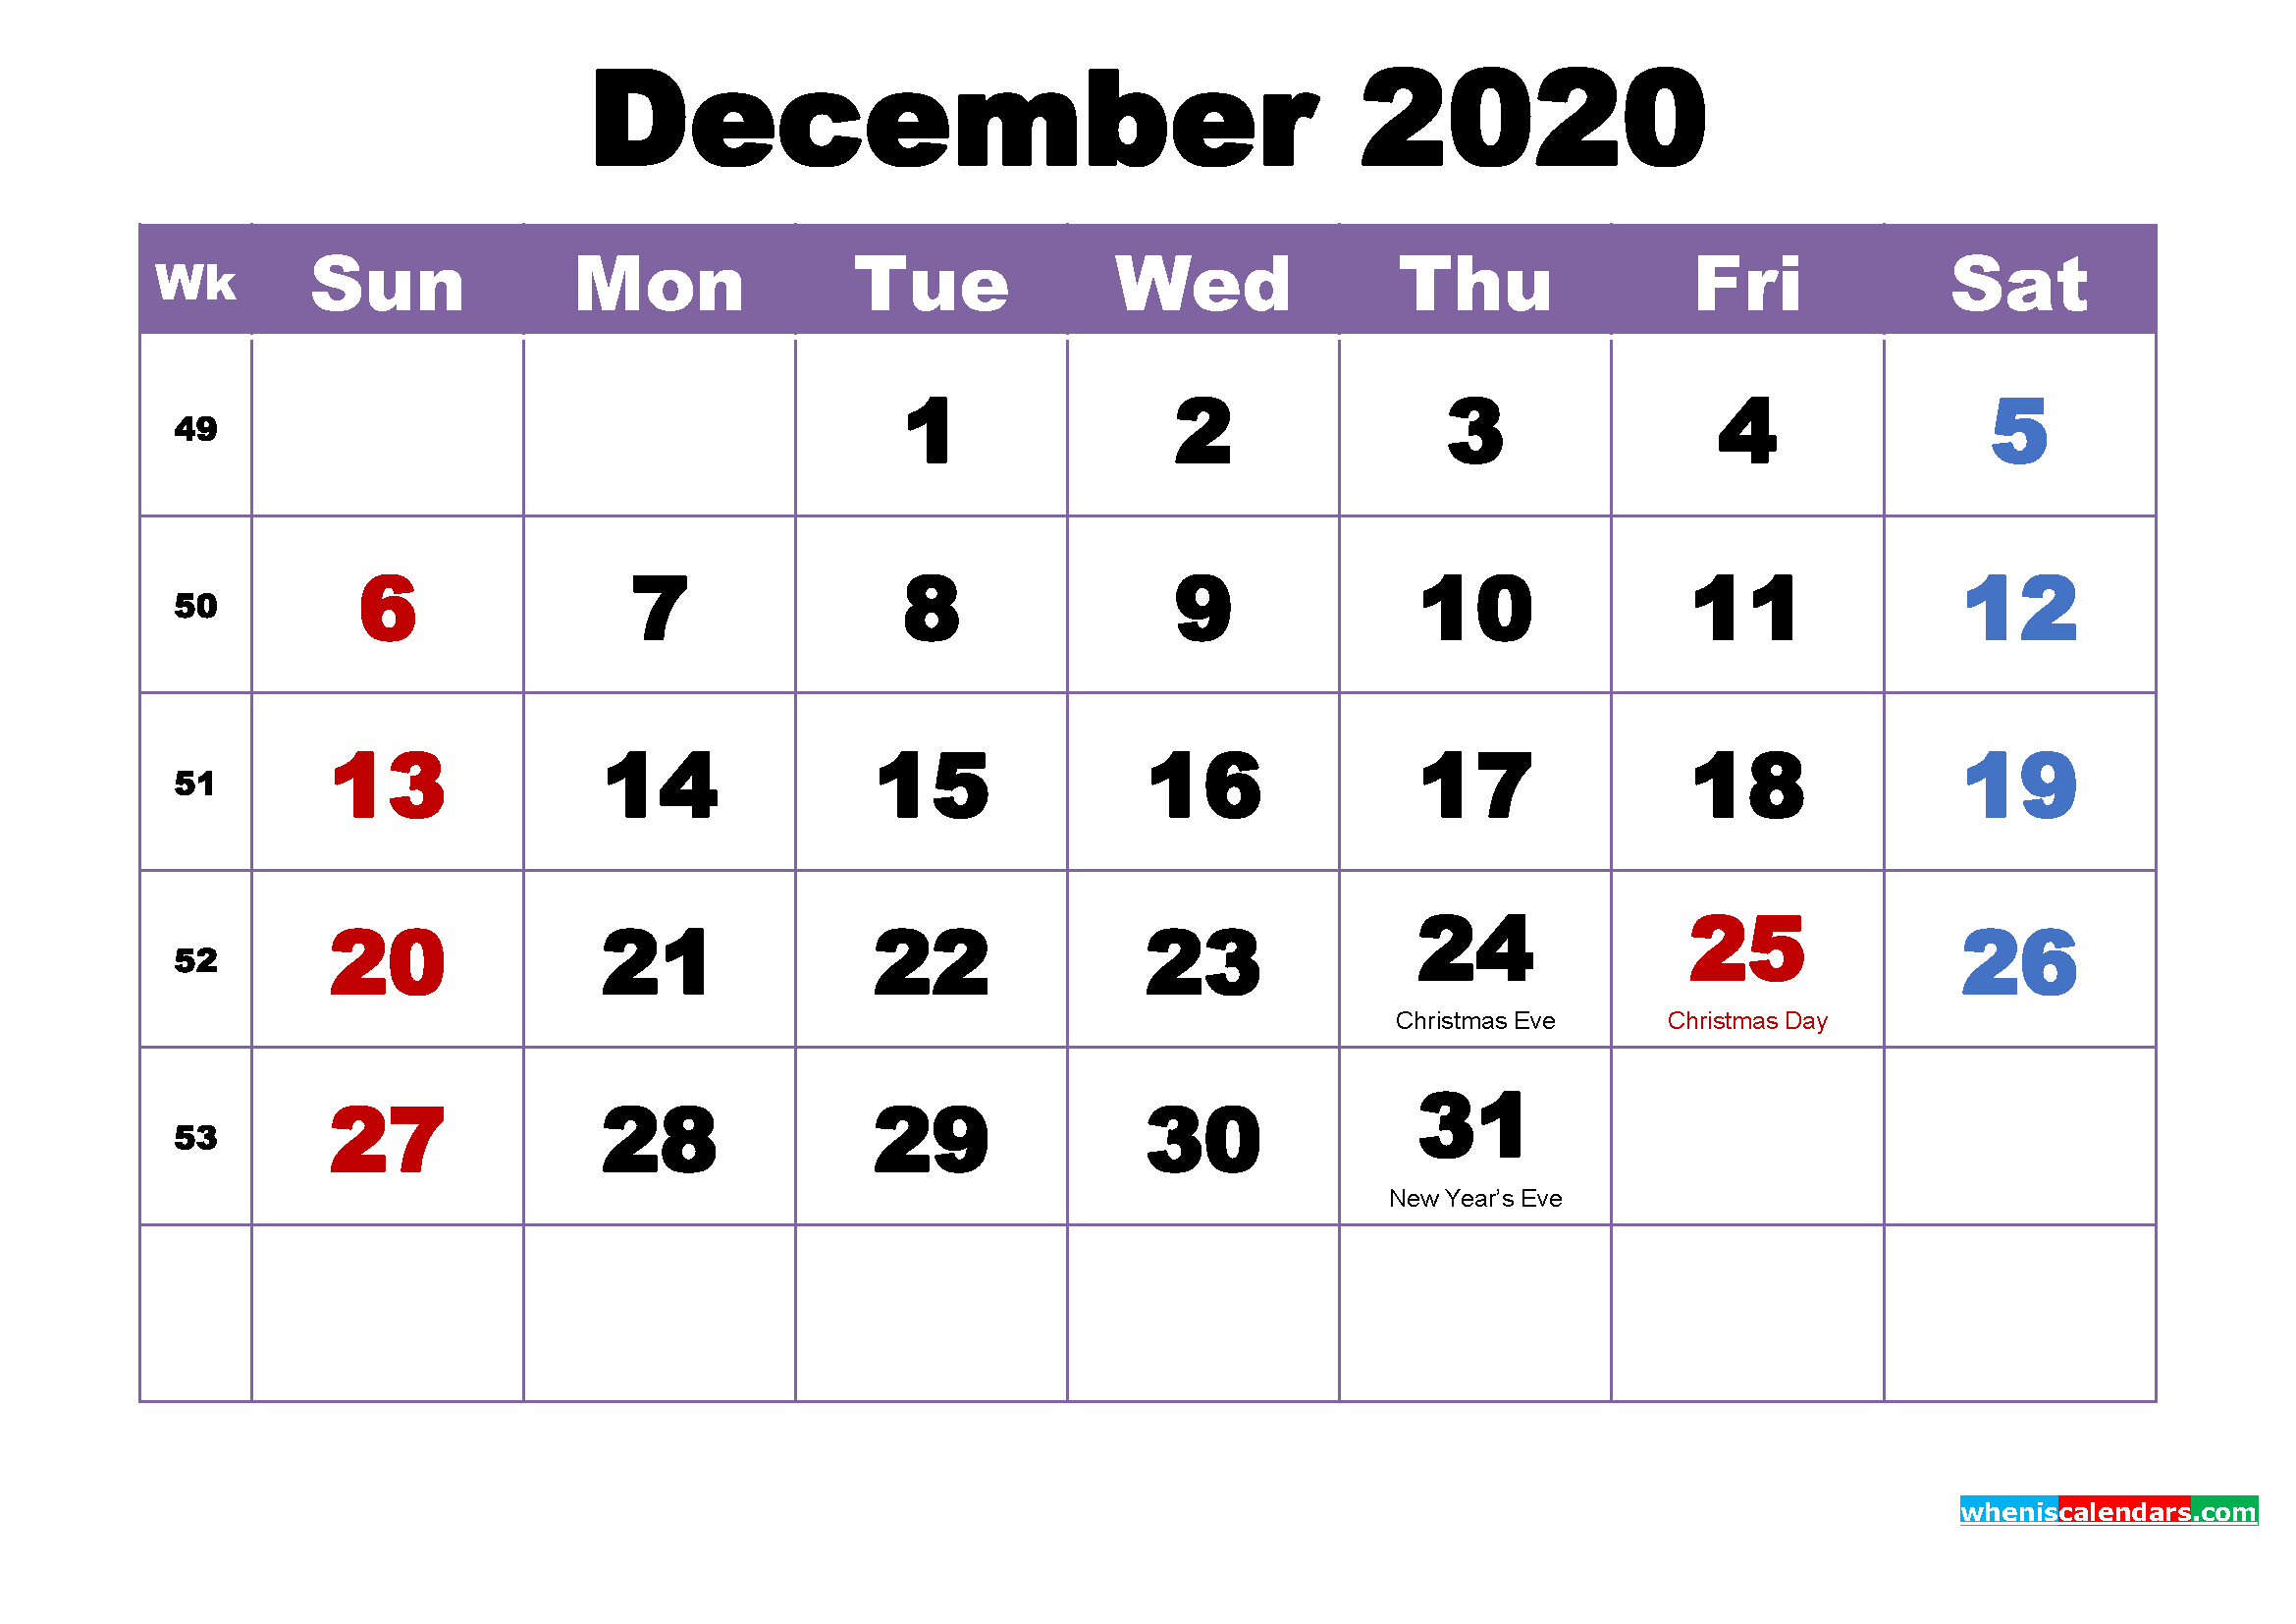 December 2020 Desktop Calendar Monthly - Free Printable Monthly Calendar December 2020 And January 2021